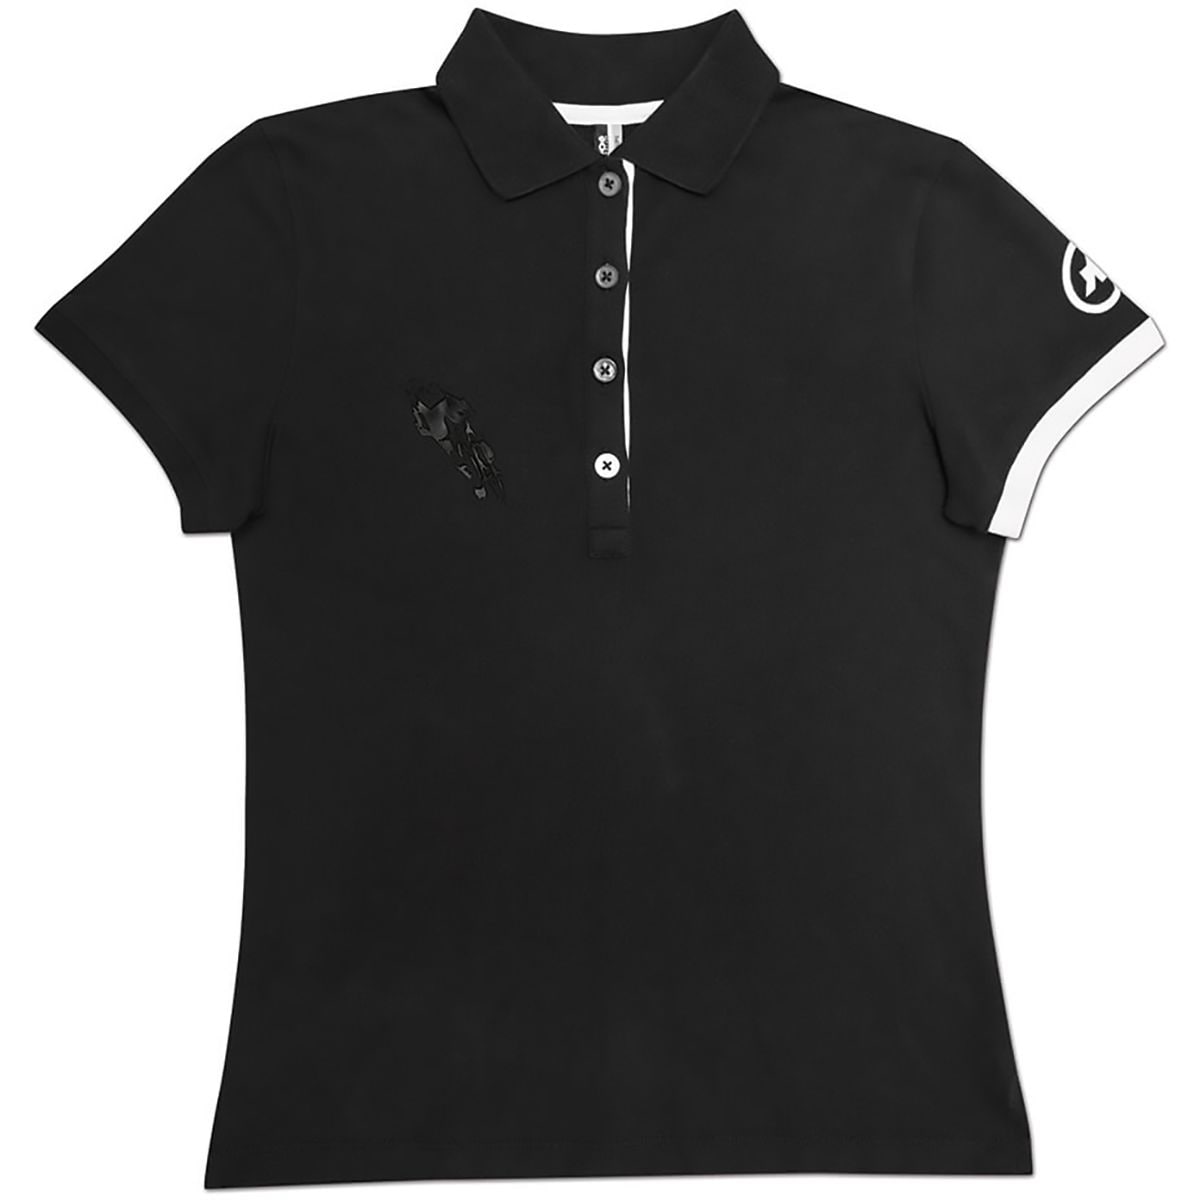 Assos Corporate Lady Polo Shirt - Women's